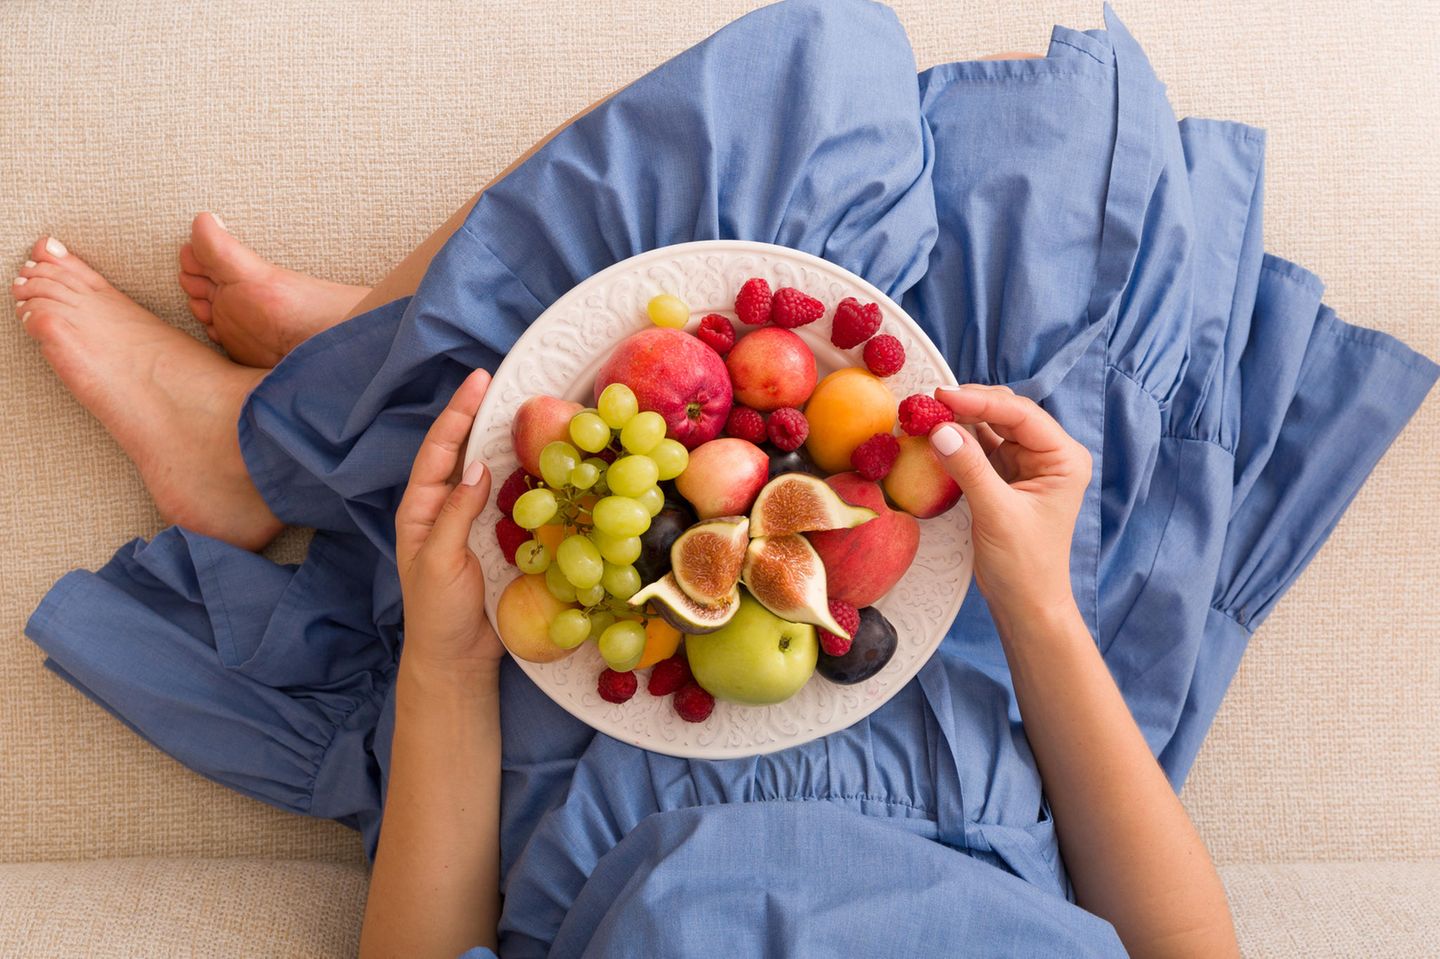 Obstflecken entfernen: Frau isst Obst